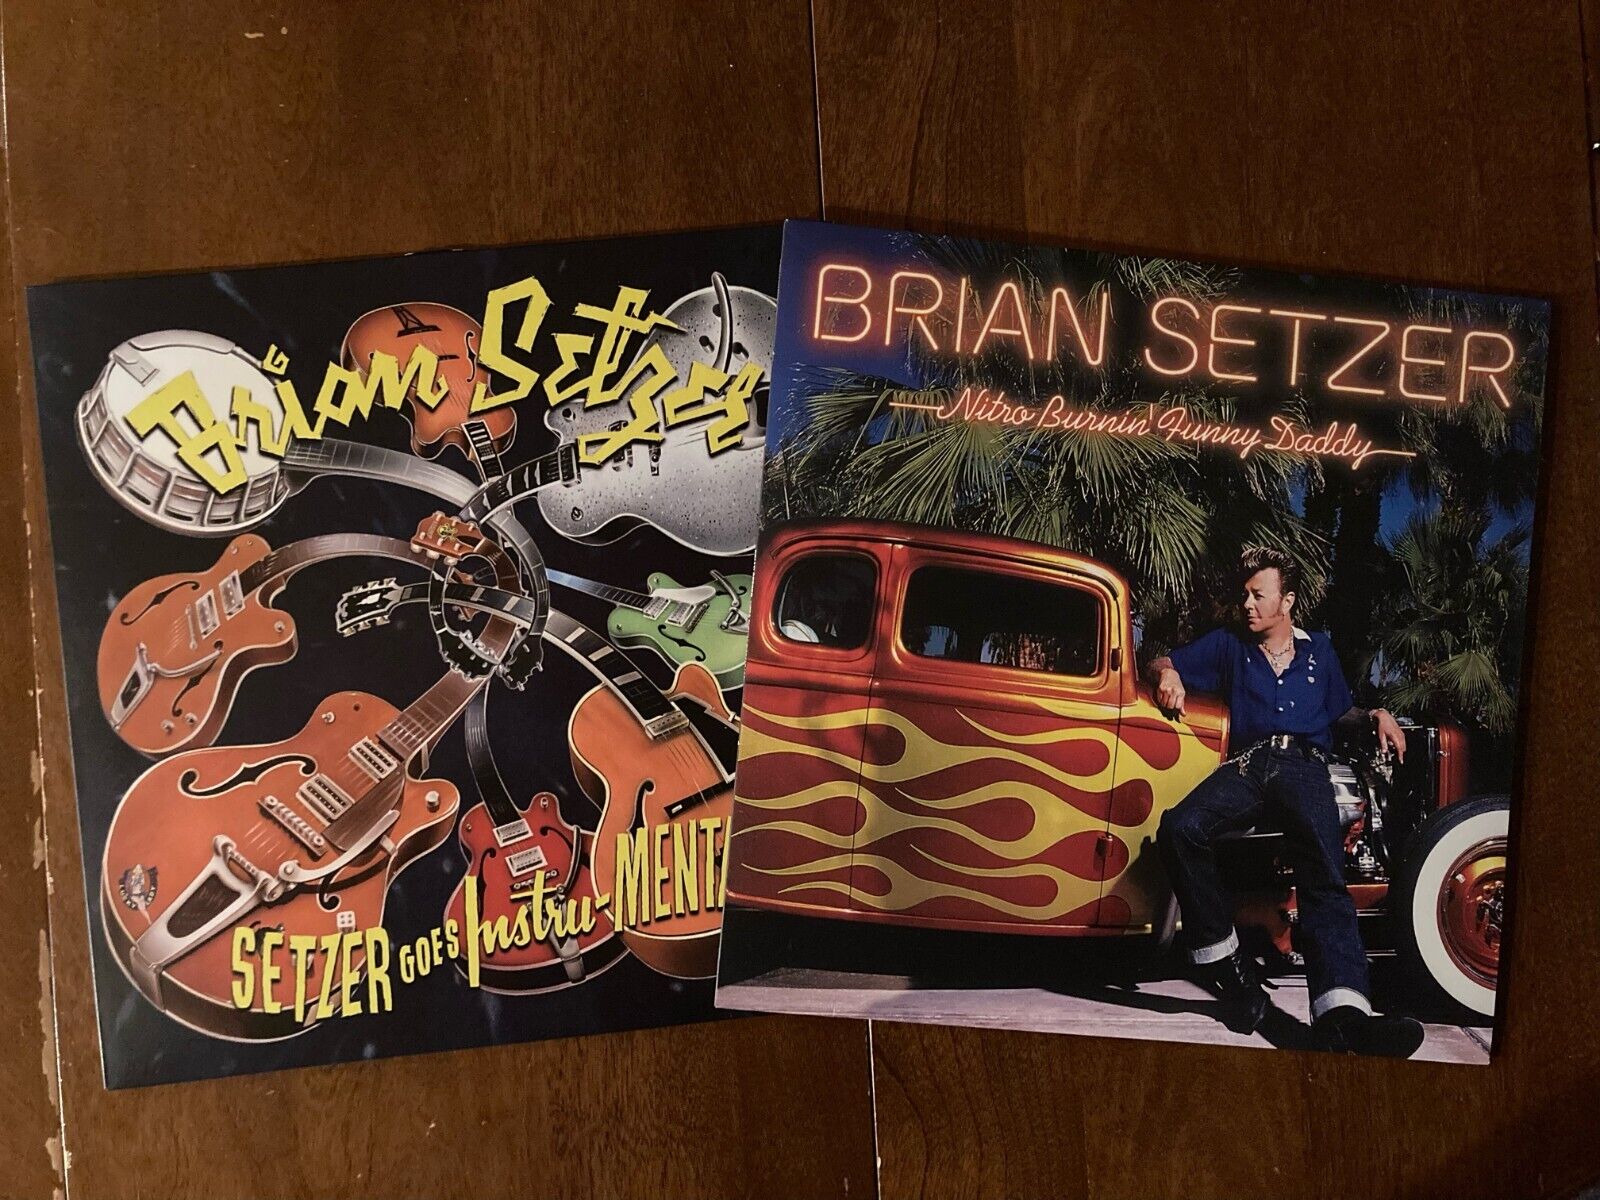 2 LPs Brian Setzer - Setzer Goes Instru-mental & Nitro Burnin' Funny Daddy -used